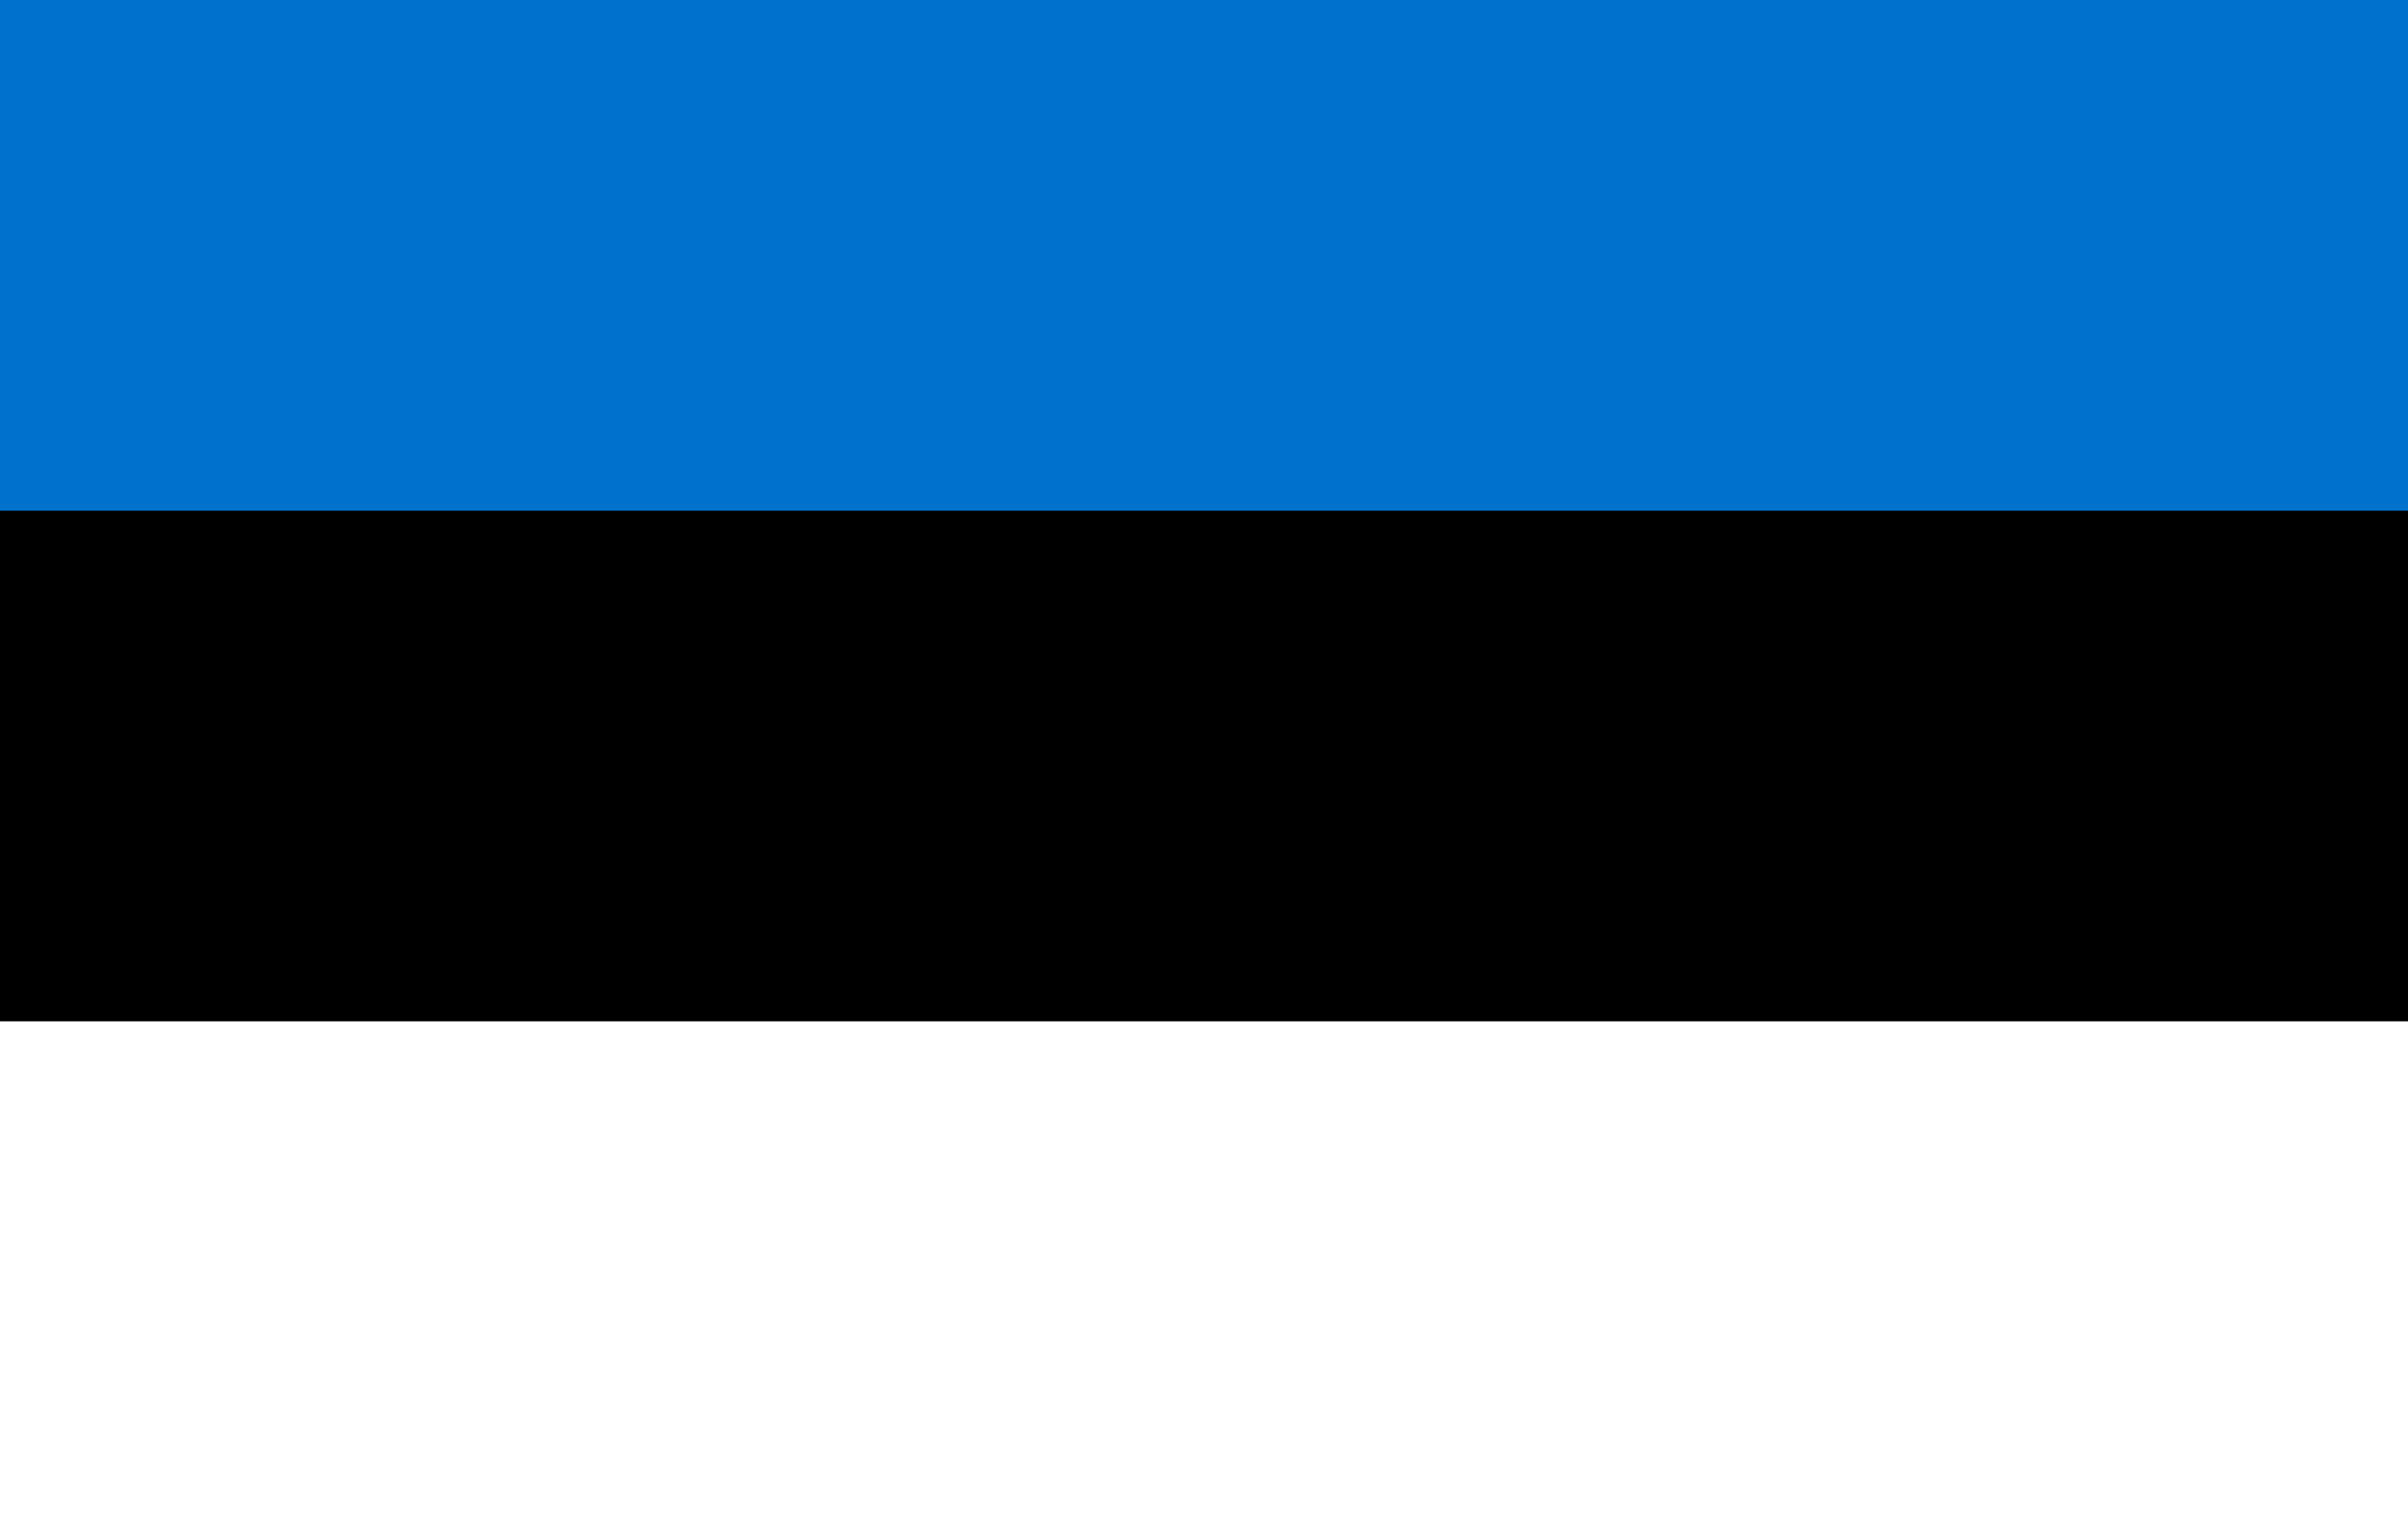 Free Estonia Flag Documents: PDF, DOC, DOCX, HTML & More!